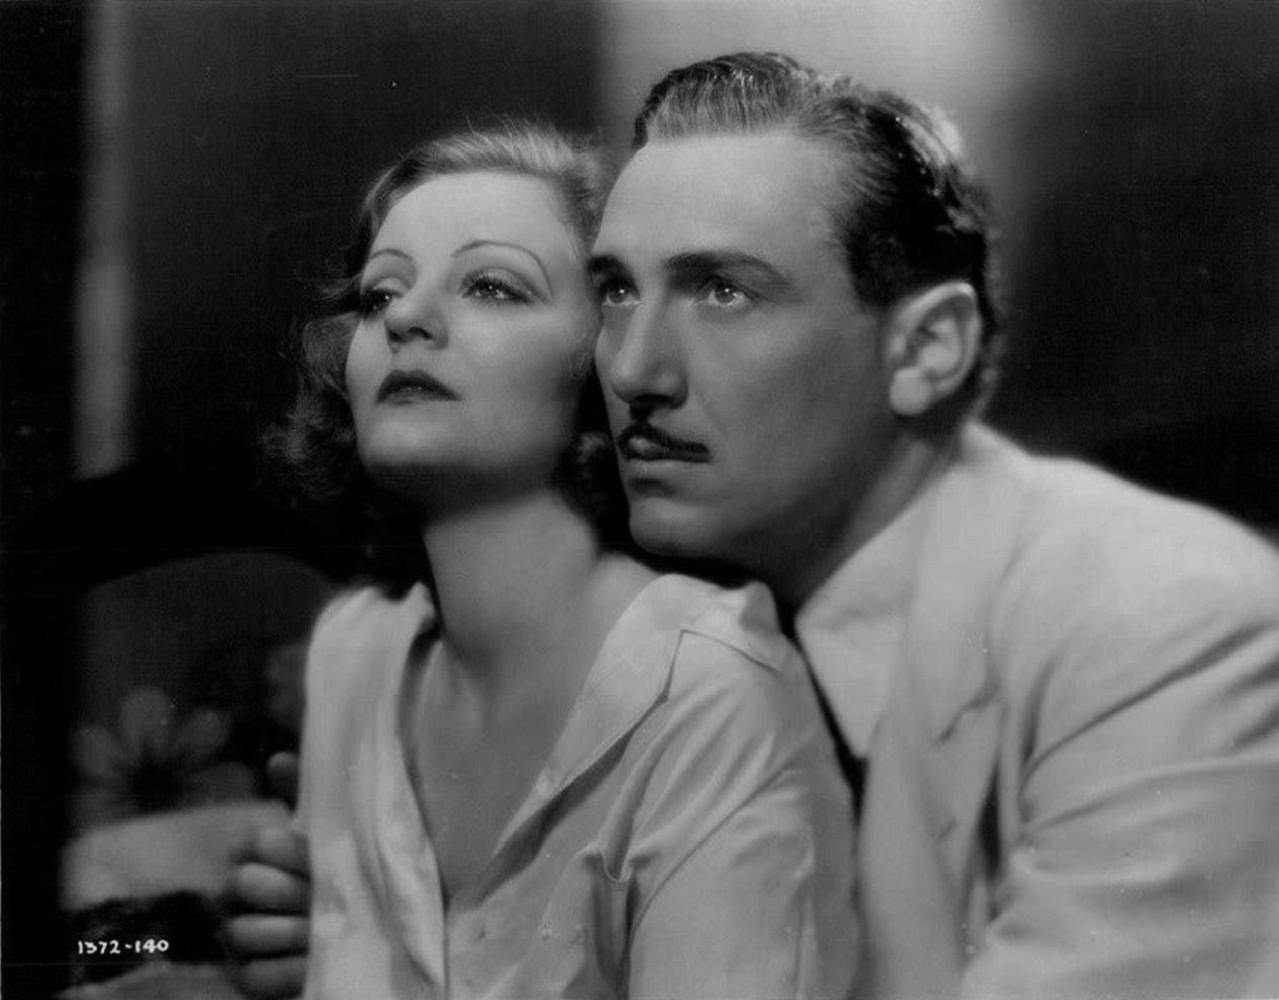 Tallulah Bankhead and Paul Lukas in Thunder below, 1932